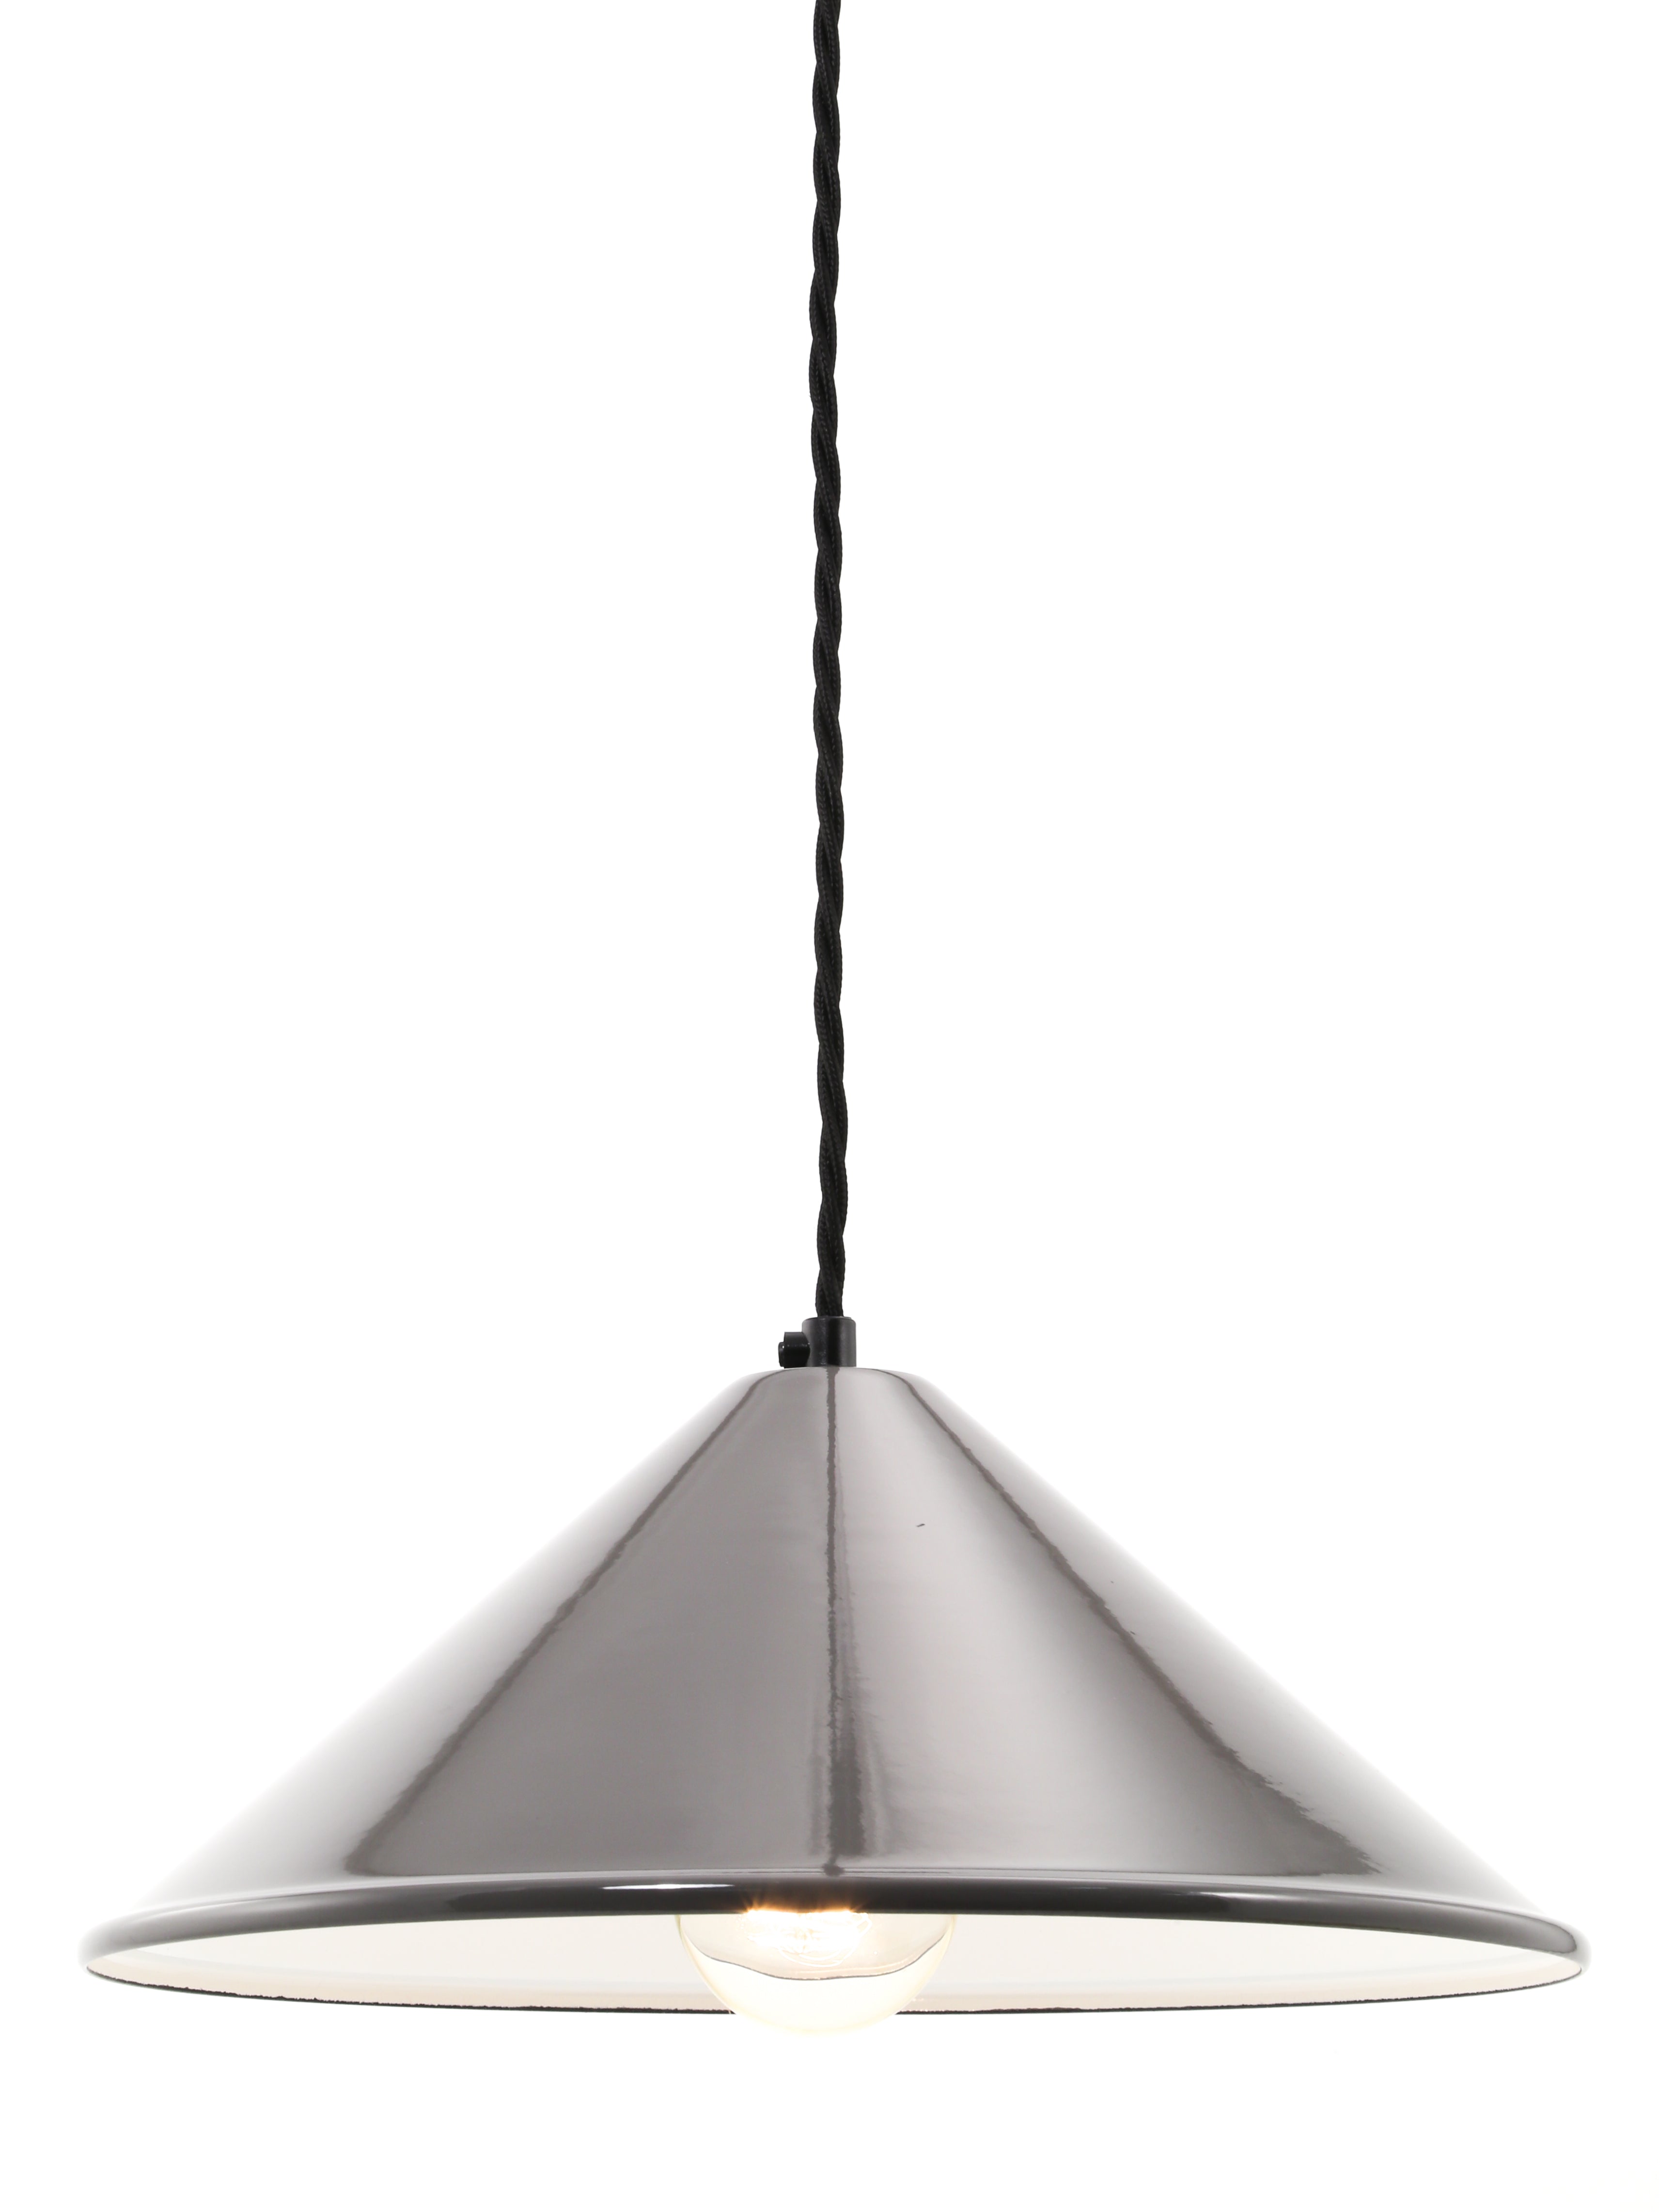 Grey Enamel Cone Lamp Shade | 310mm